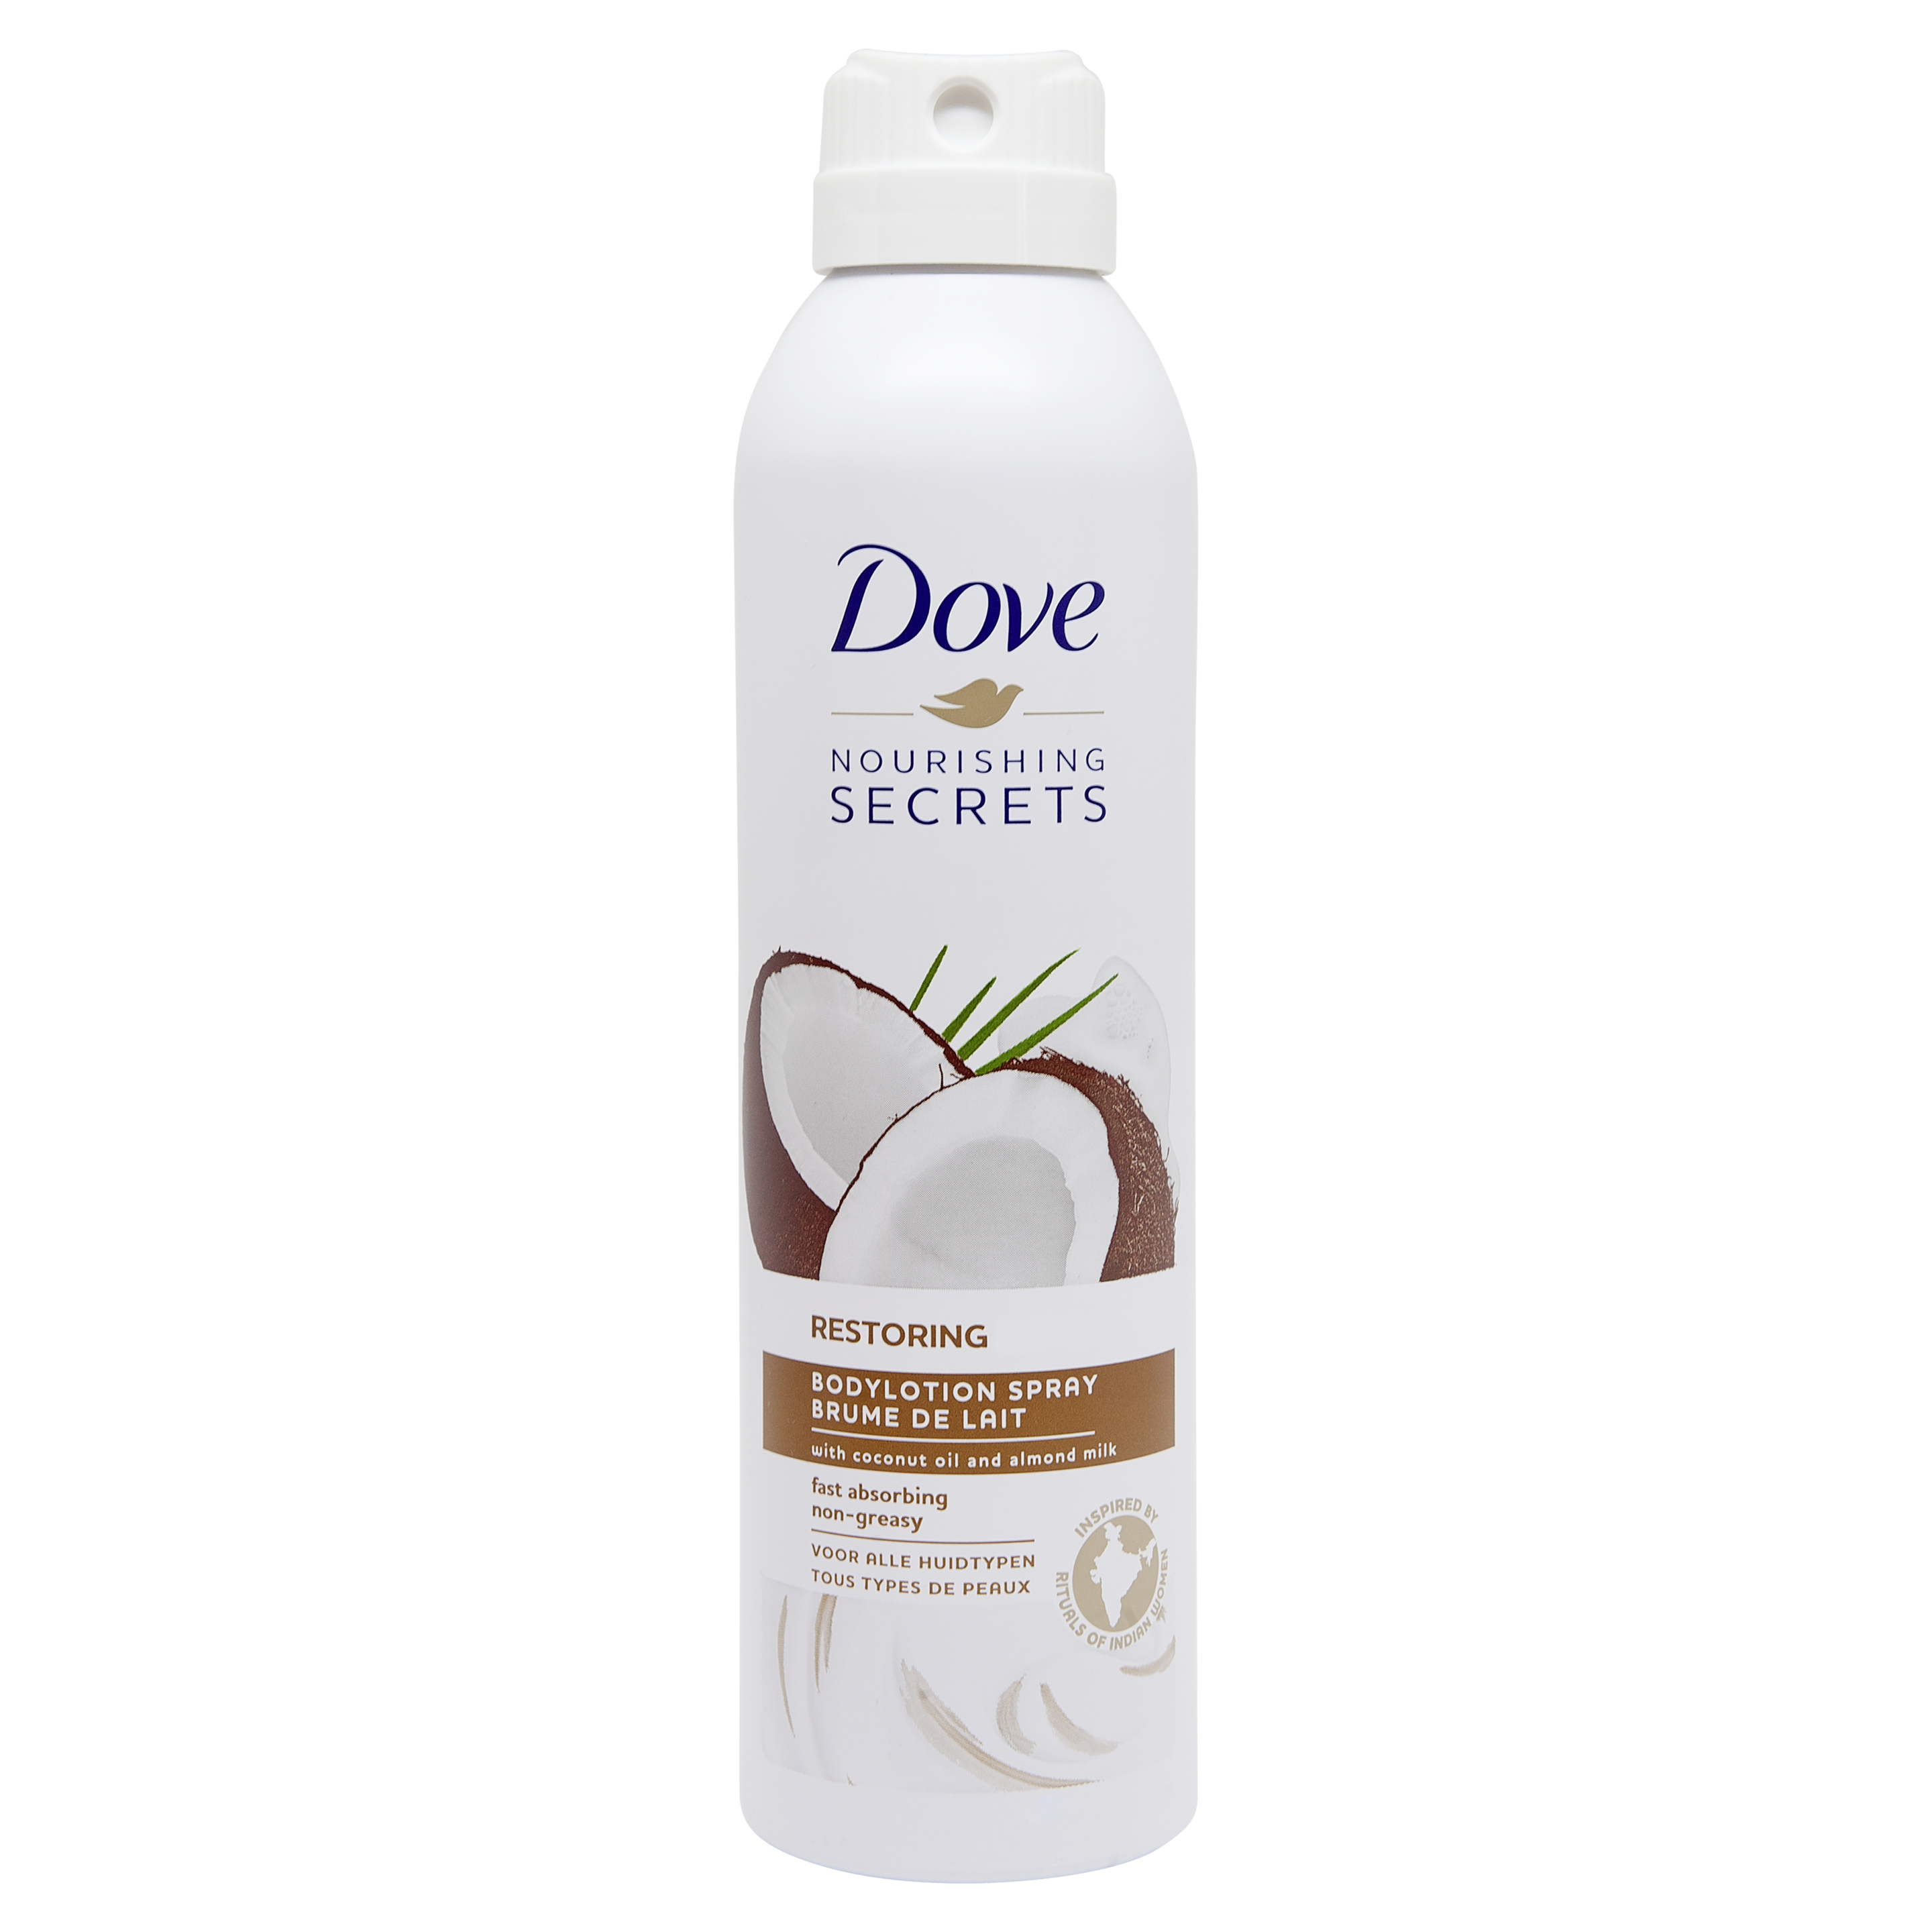 Dove Nourishing Secrets Restoring Ritual Body Lotion Spray 190ml